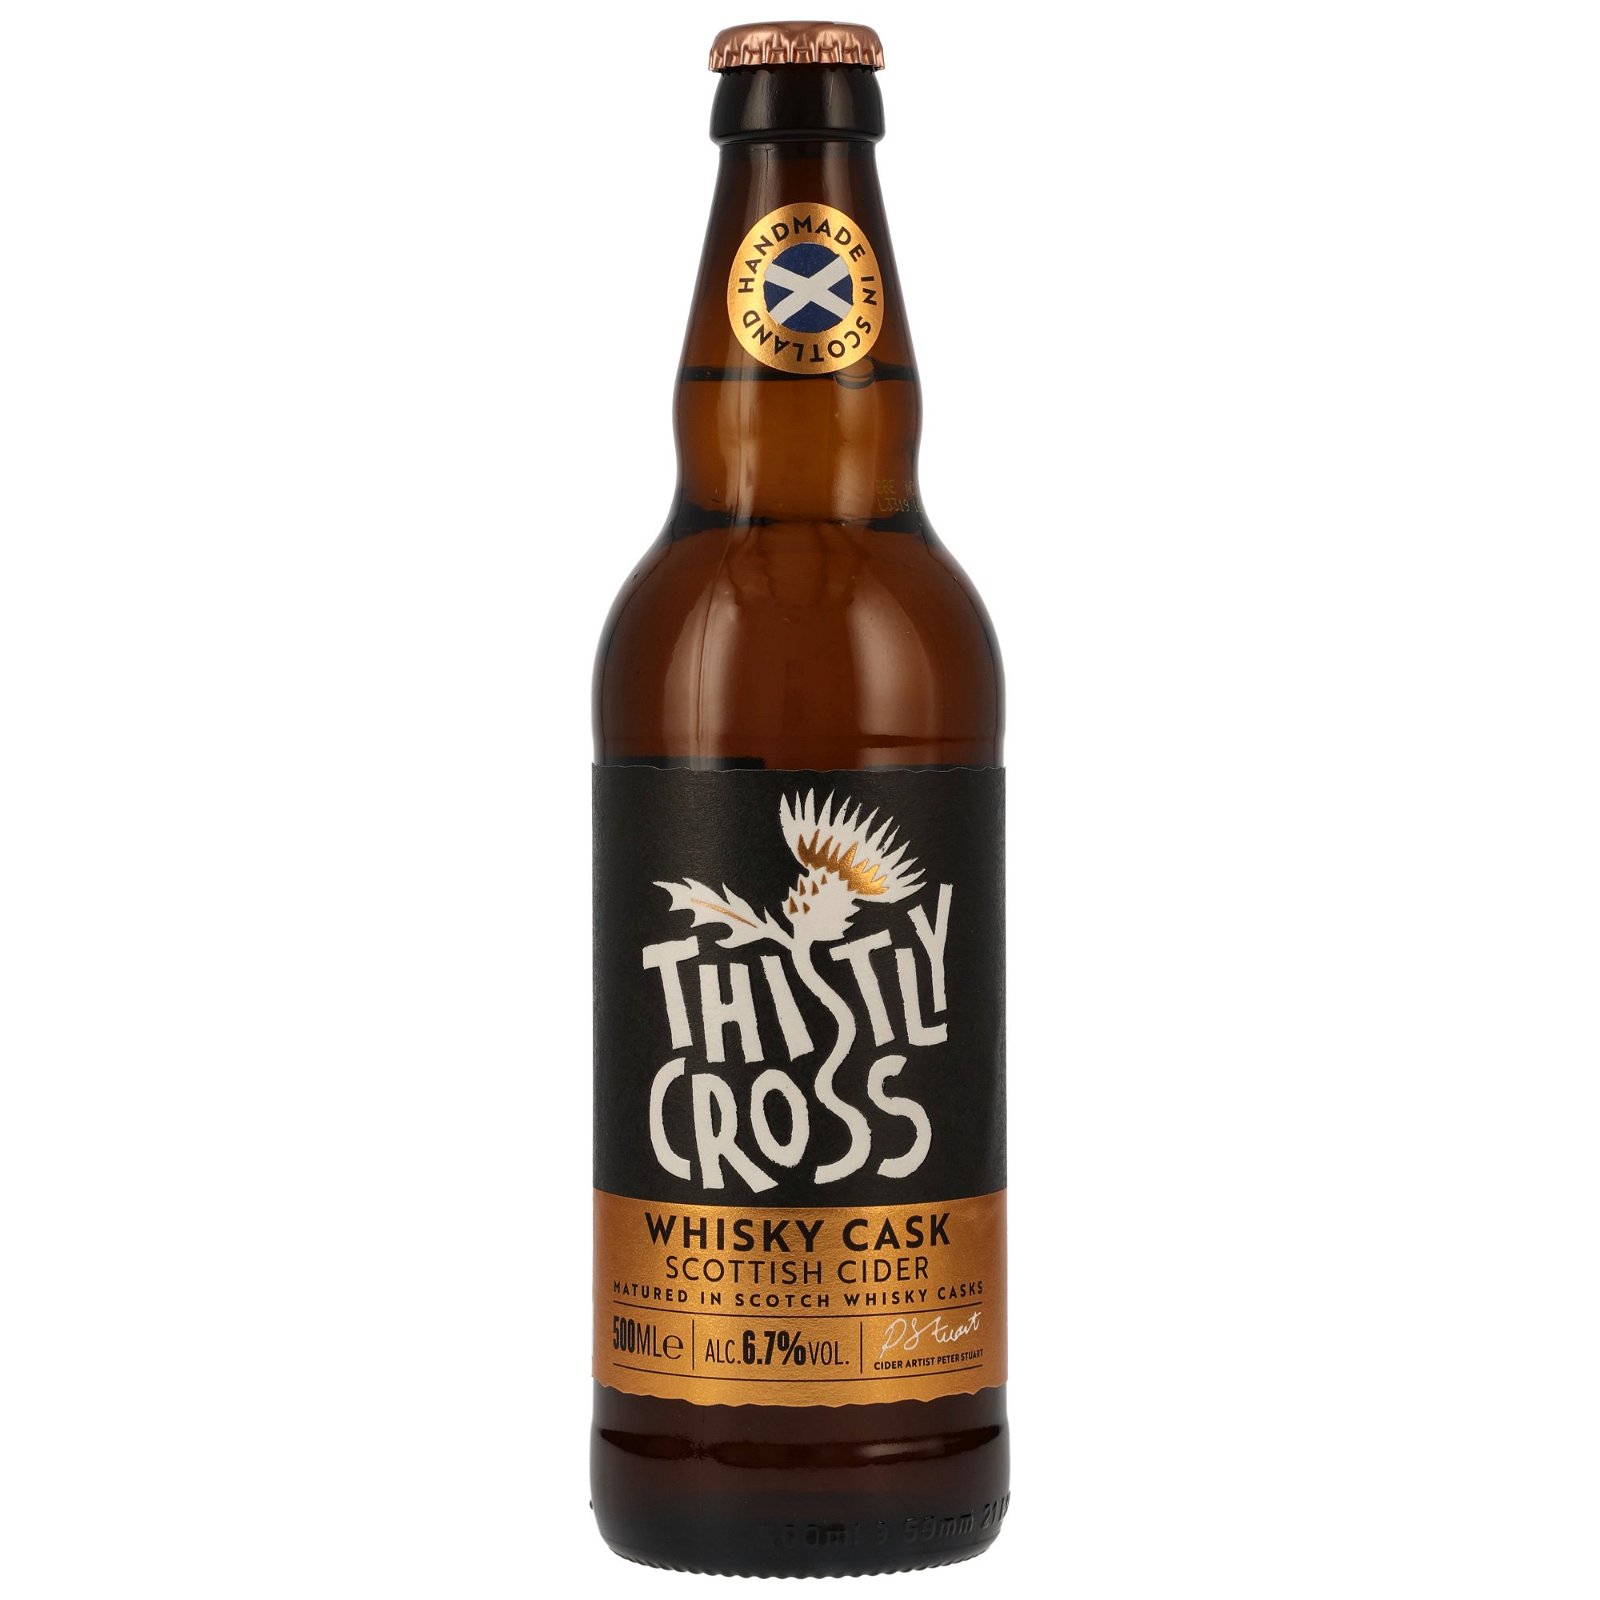 Thistly Cross Whisky Cask Scottish Cider